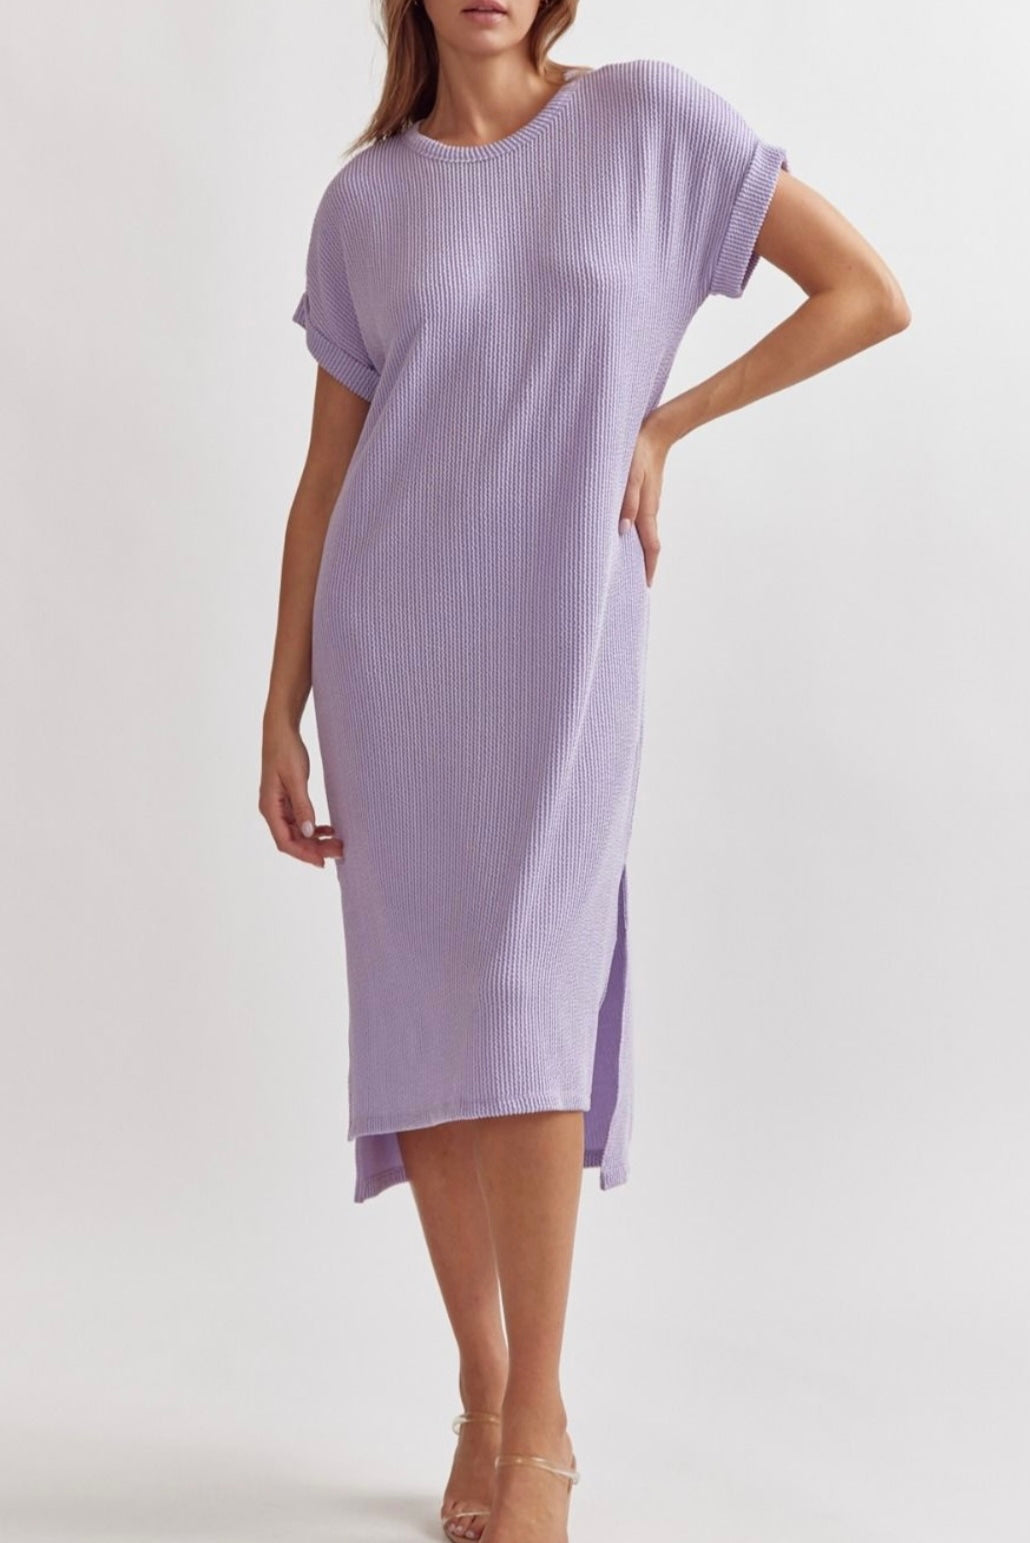 Pennsylvania Ribbed Dress - Lavender